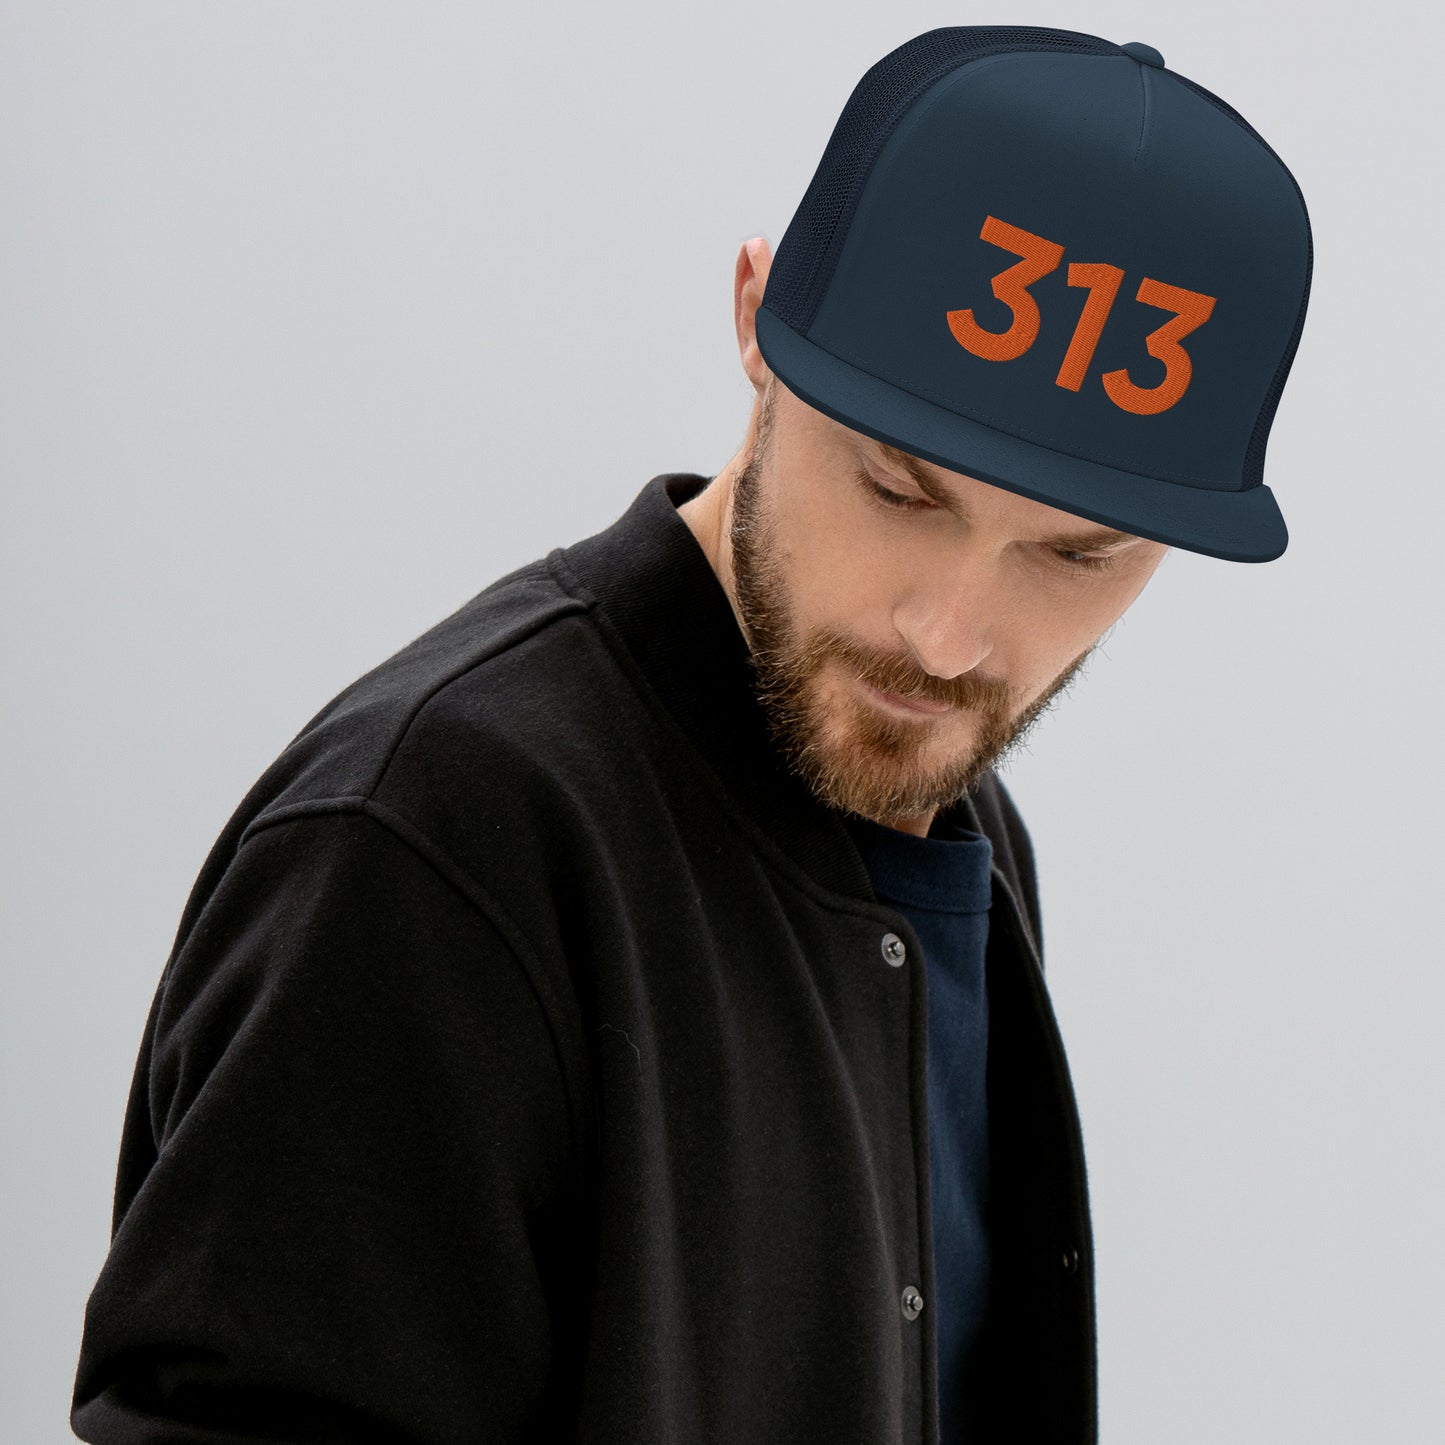 313 Detroit Blue Trucker Hat